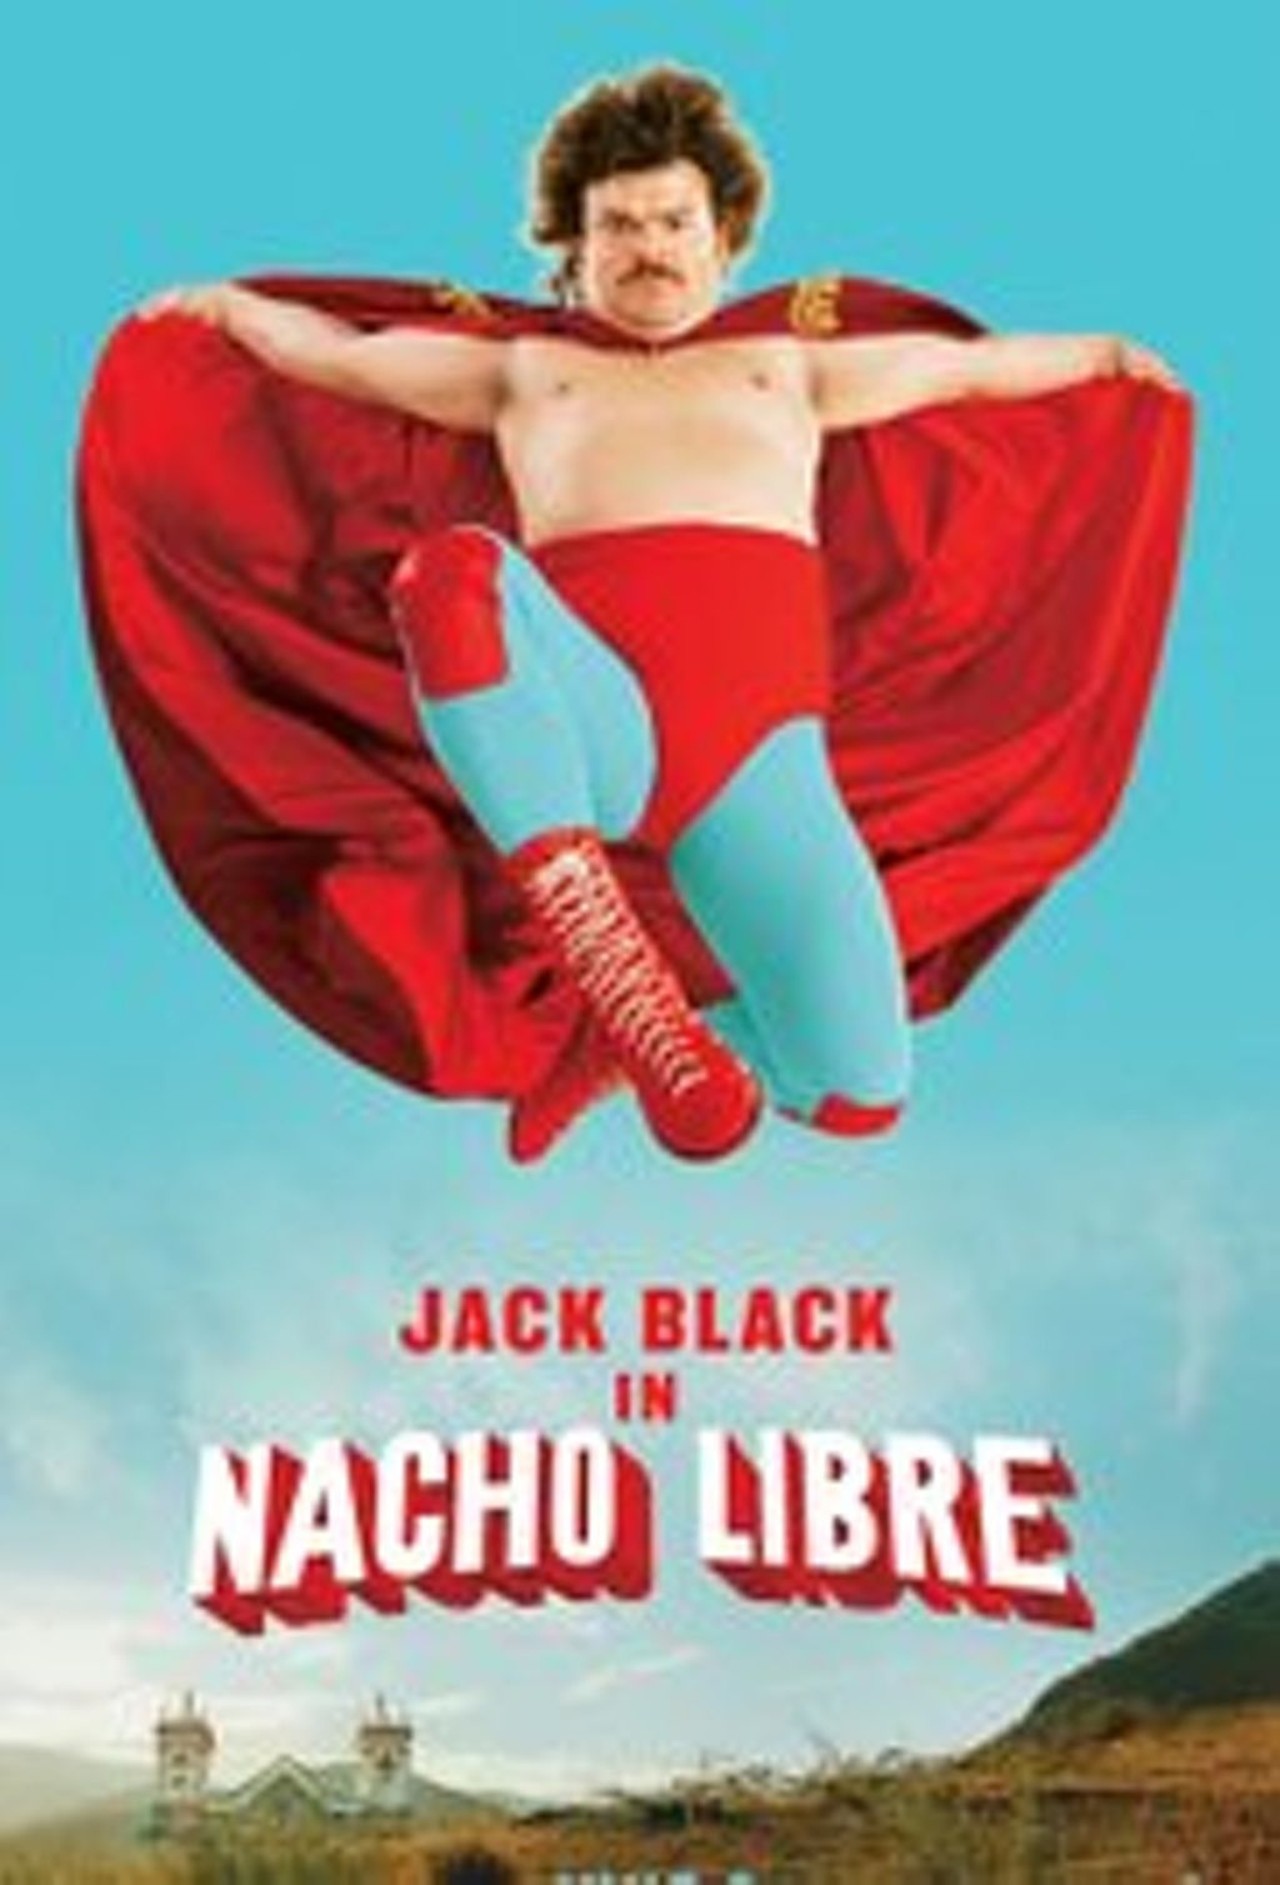 Nacho Libre
Sat., March 25, 6:30 p.m., Free